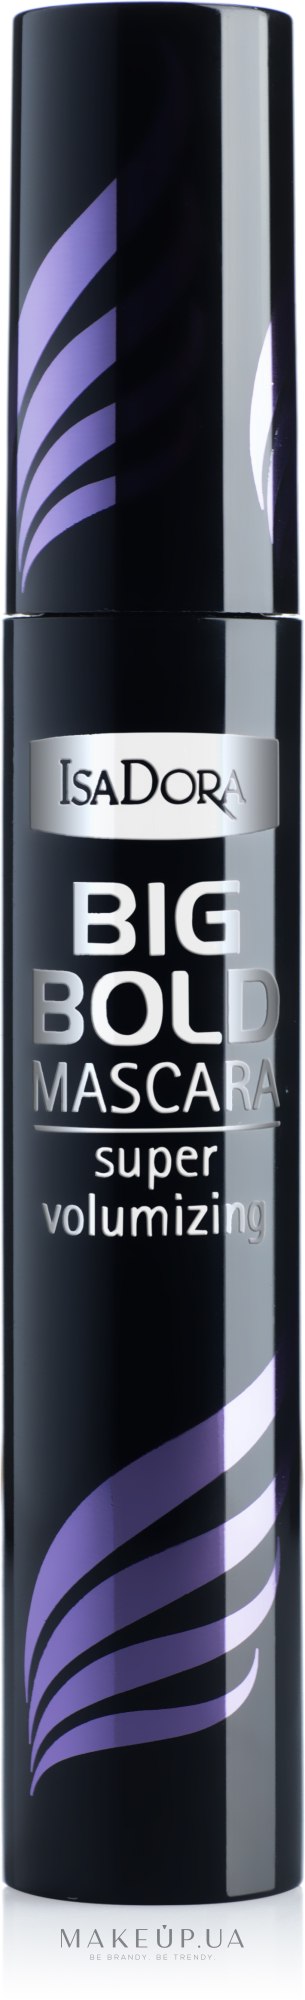 isadora mascara big bold super volumizing